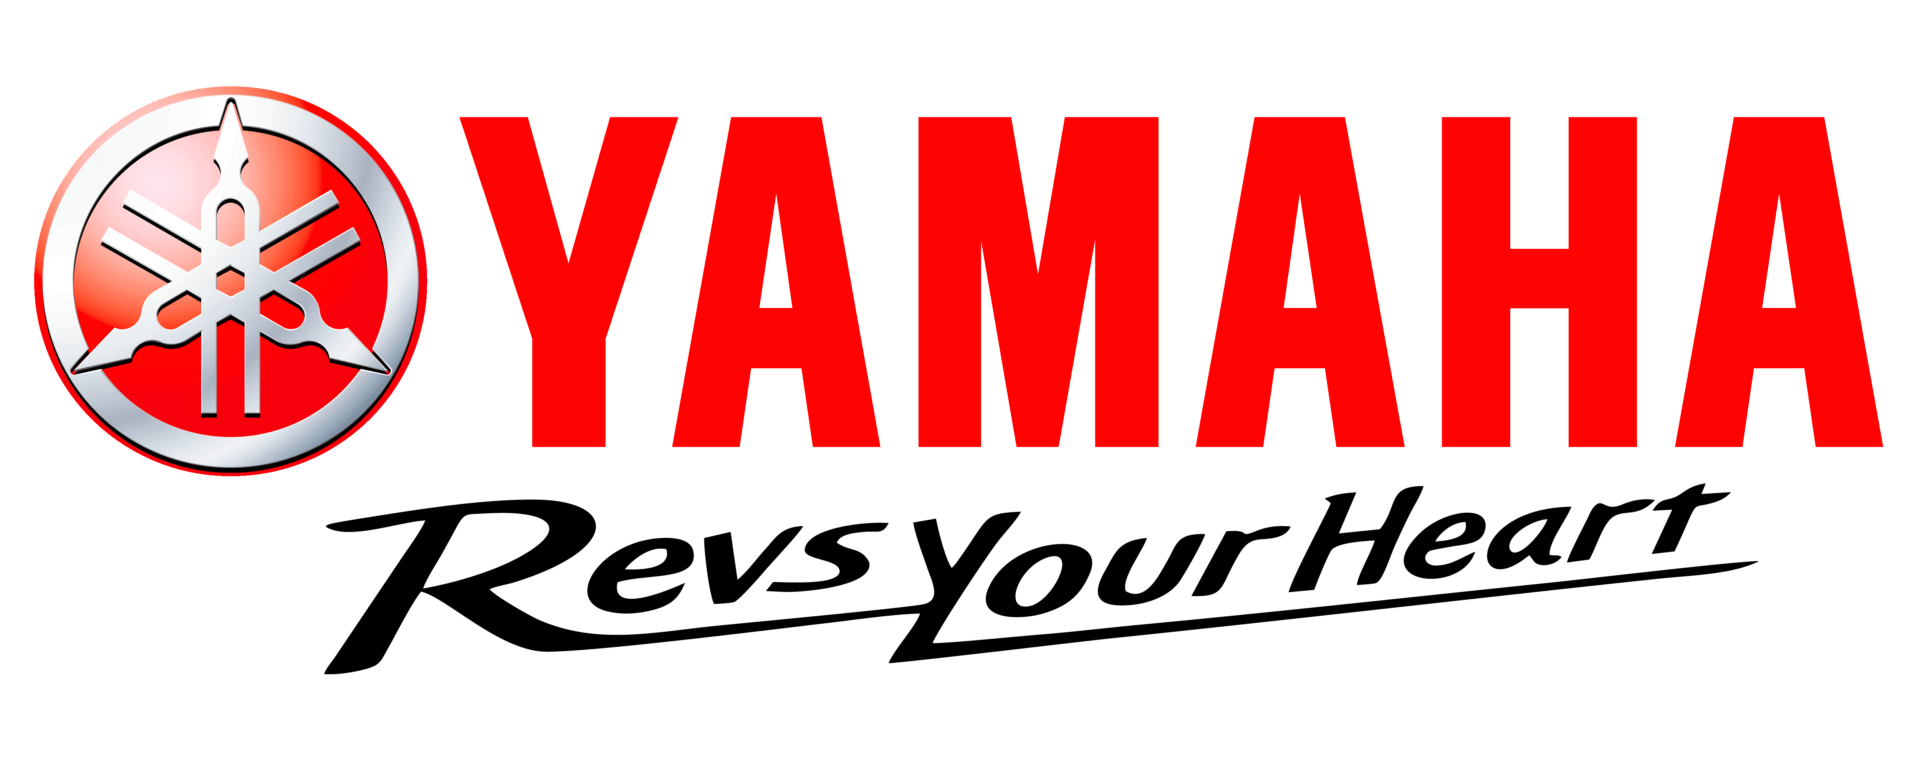 Yamaha Logo PNG Image HD